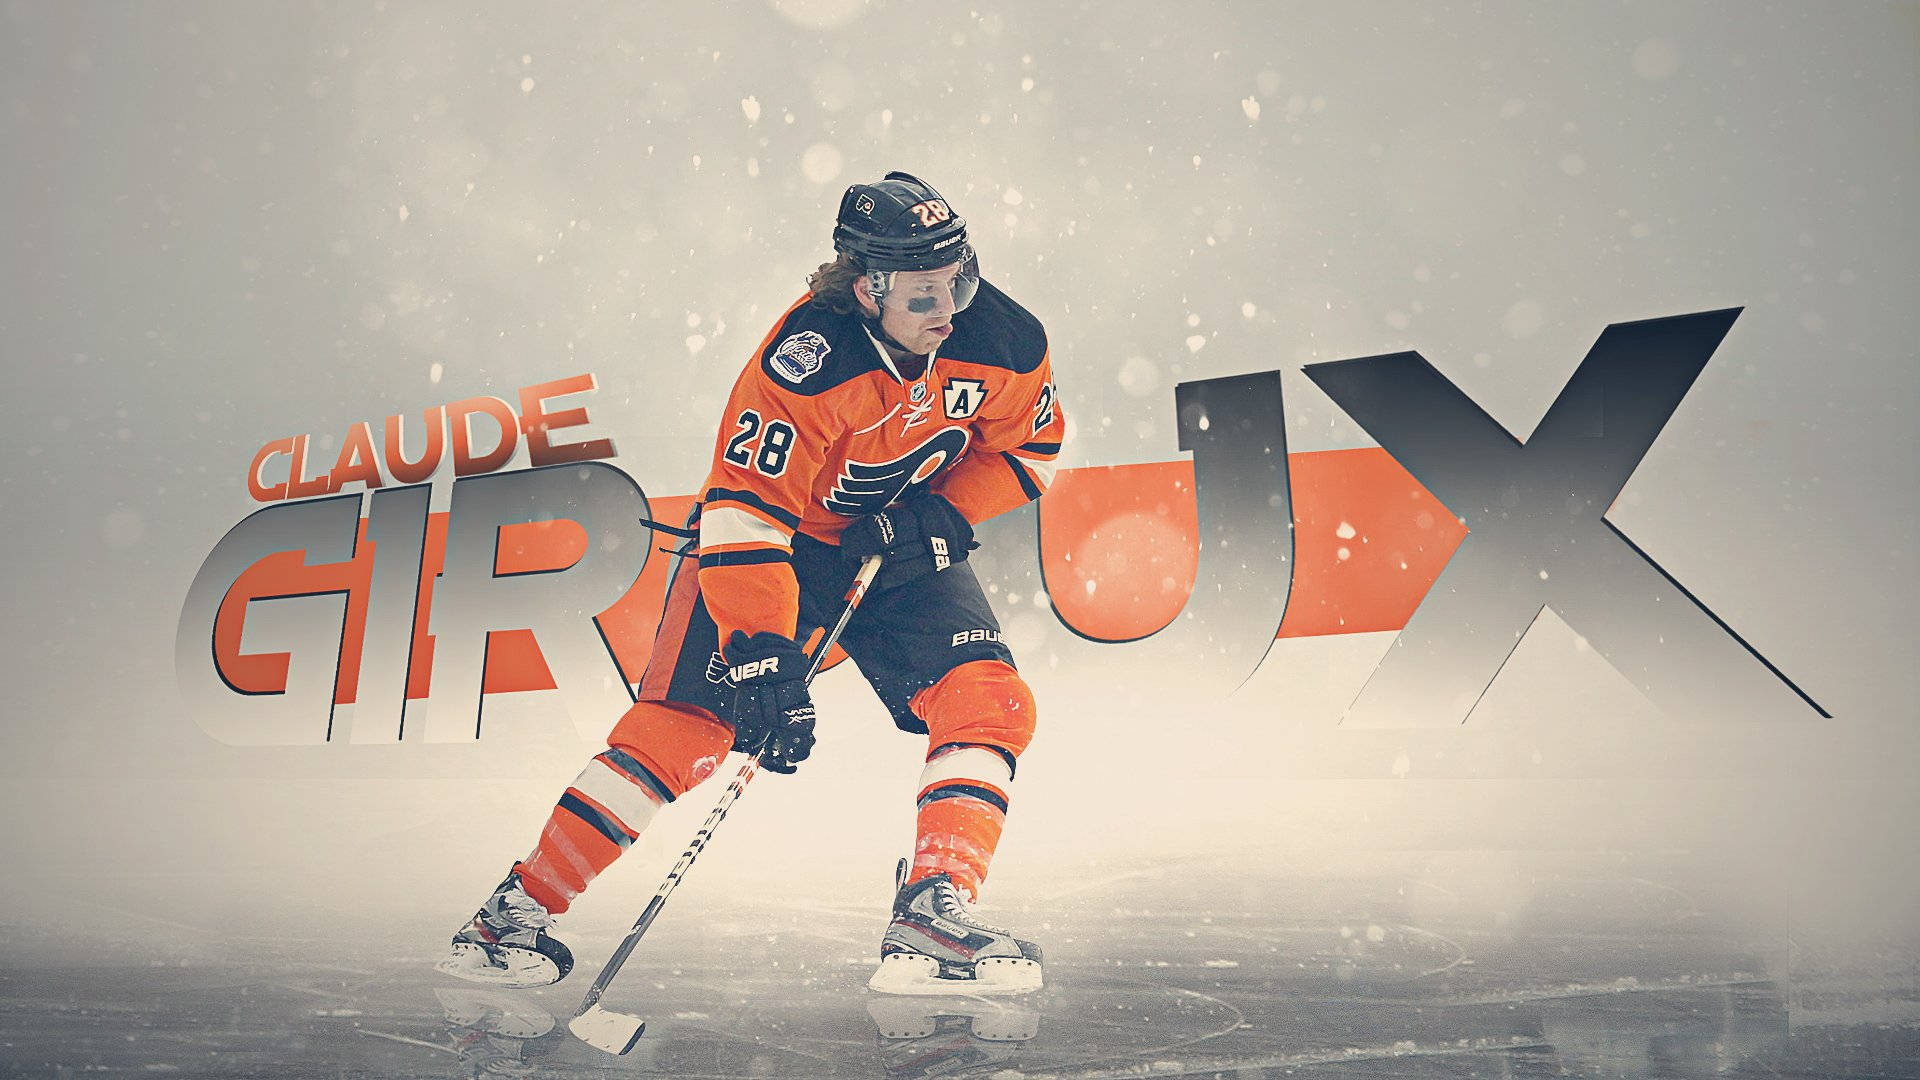 Ice Hockey Star - Claude Giroux in Action Wallpaper